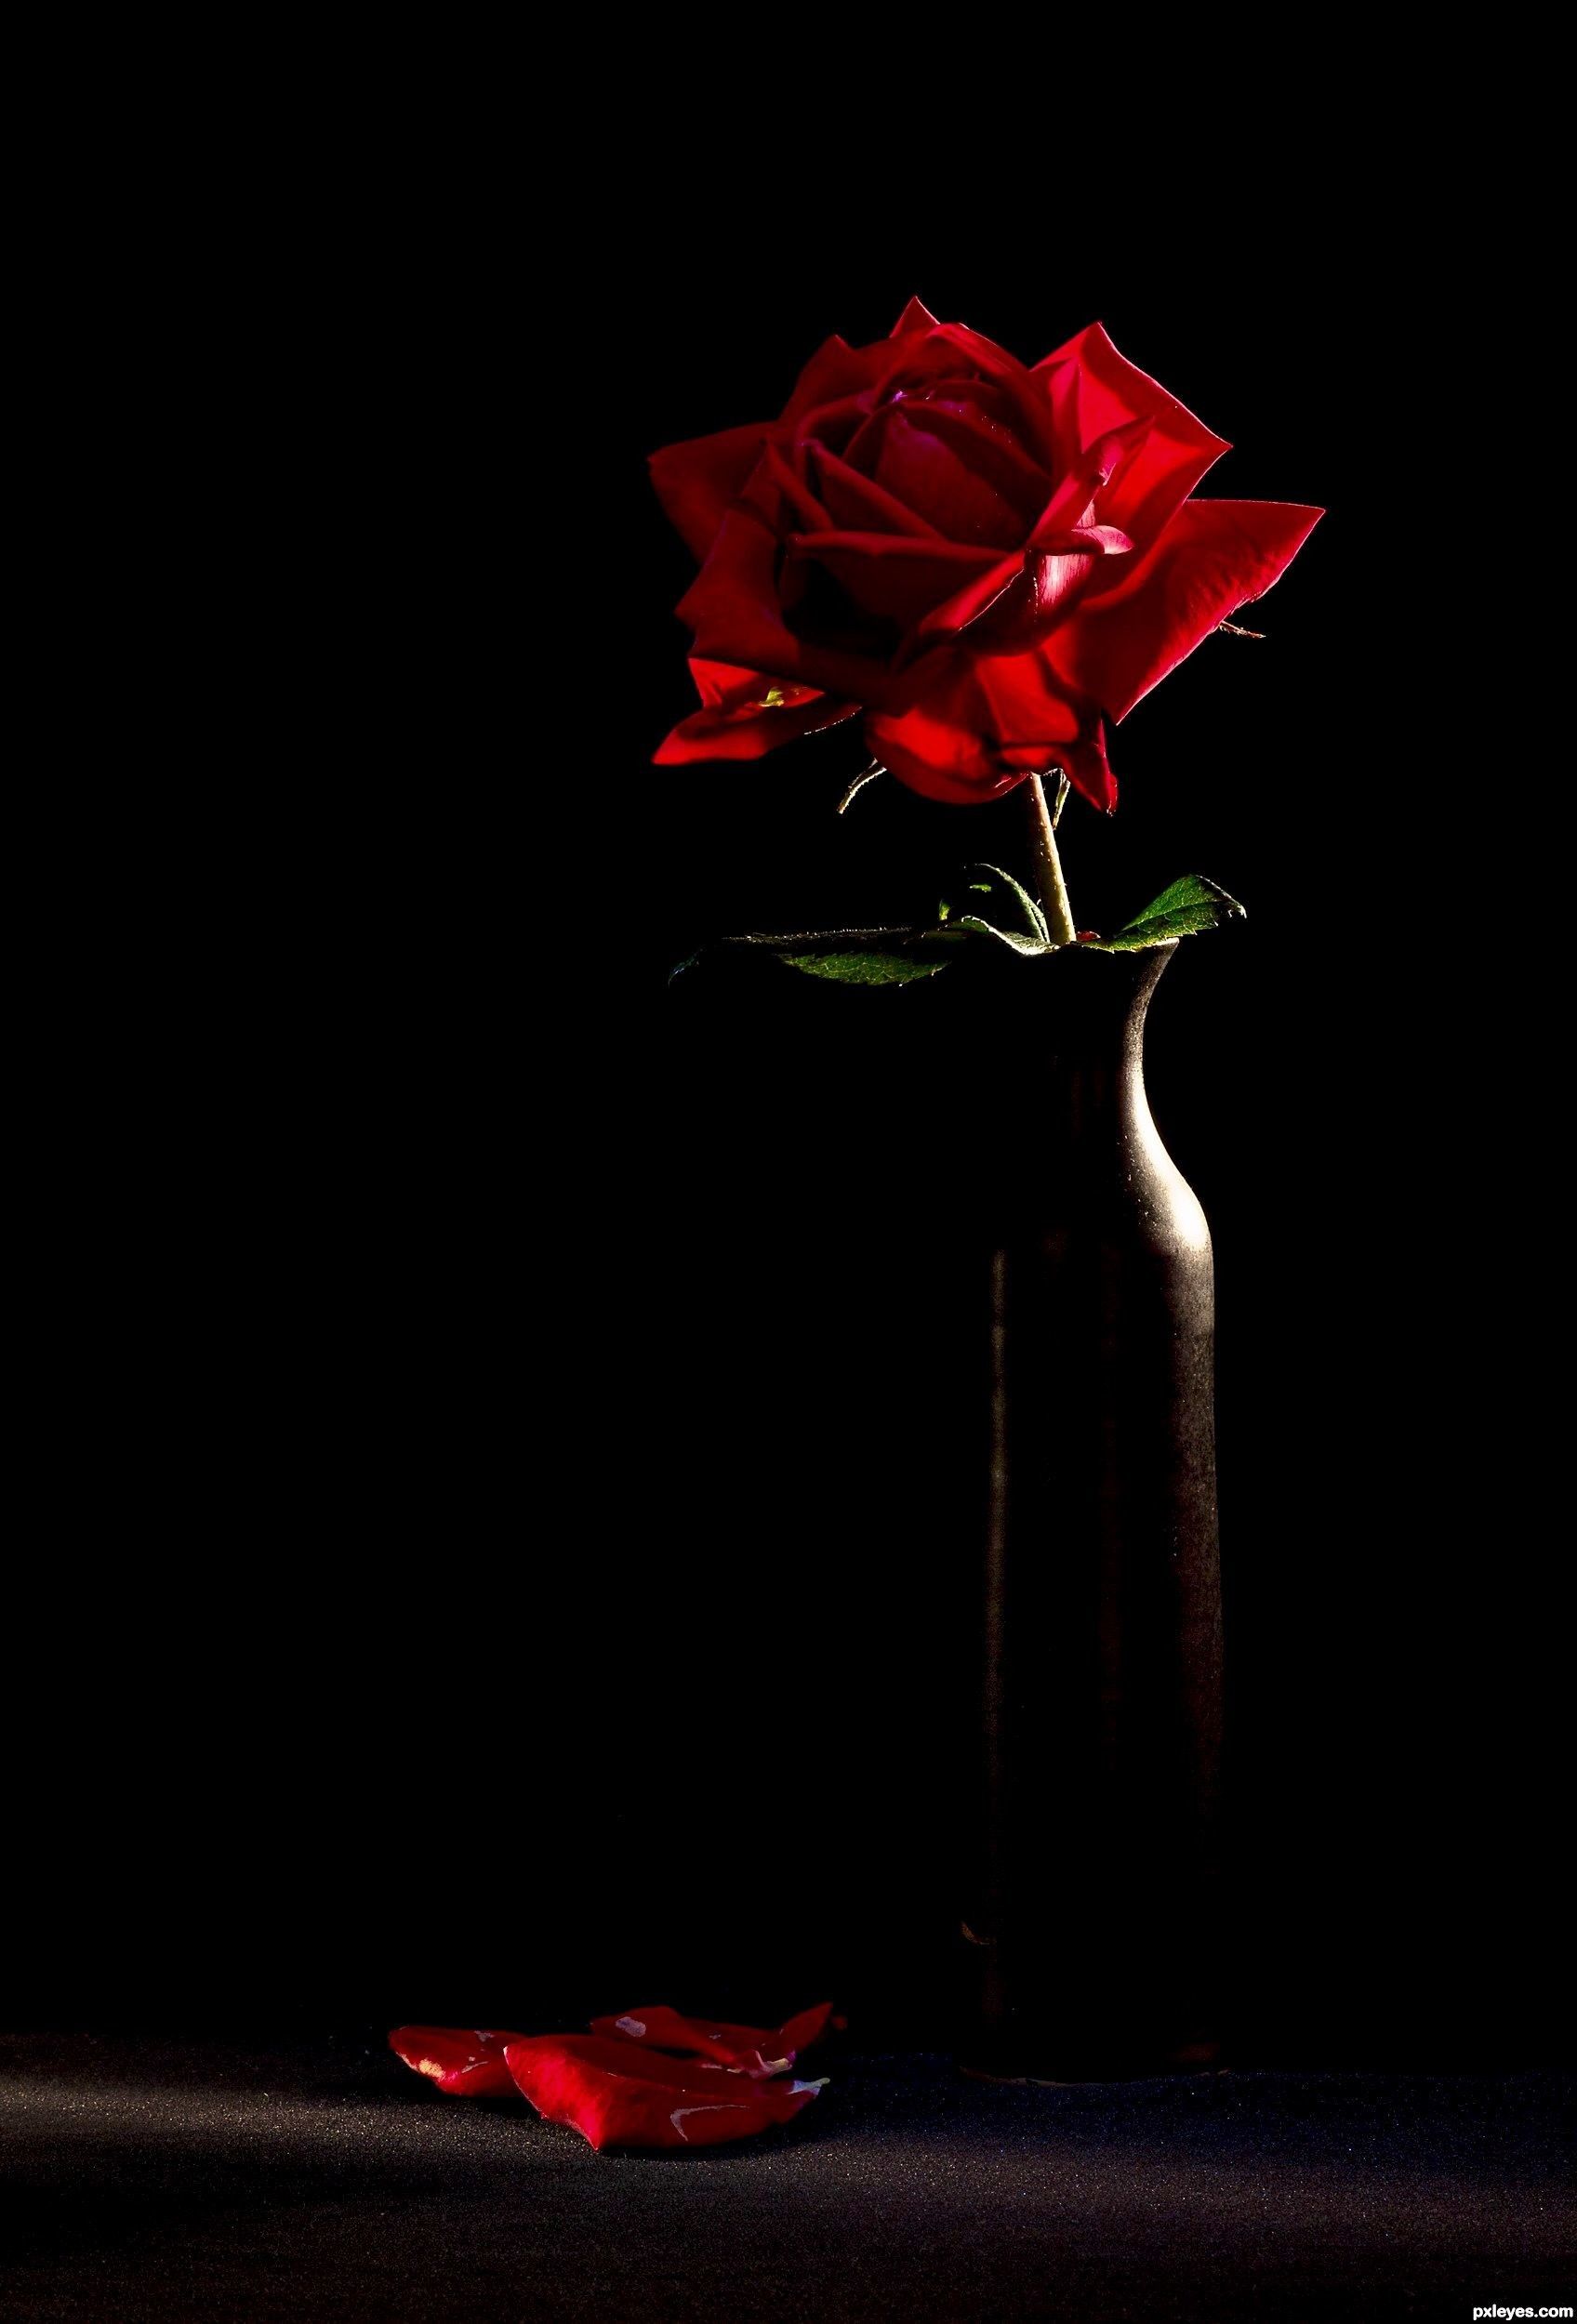 Aesthetic Red Rose Black Background Wallpaper